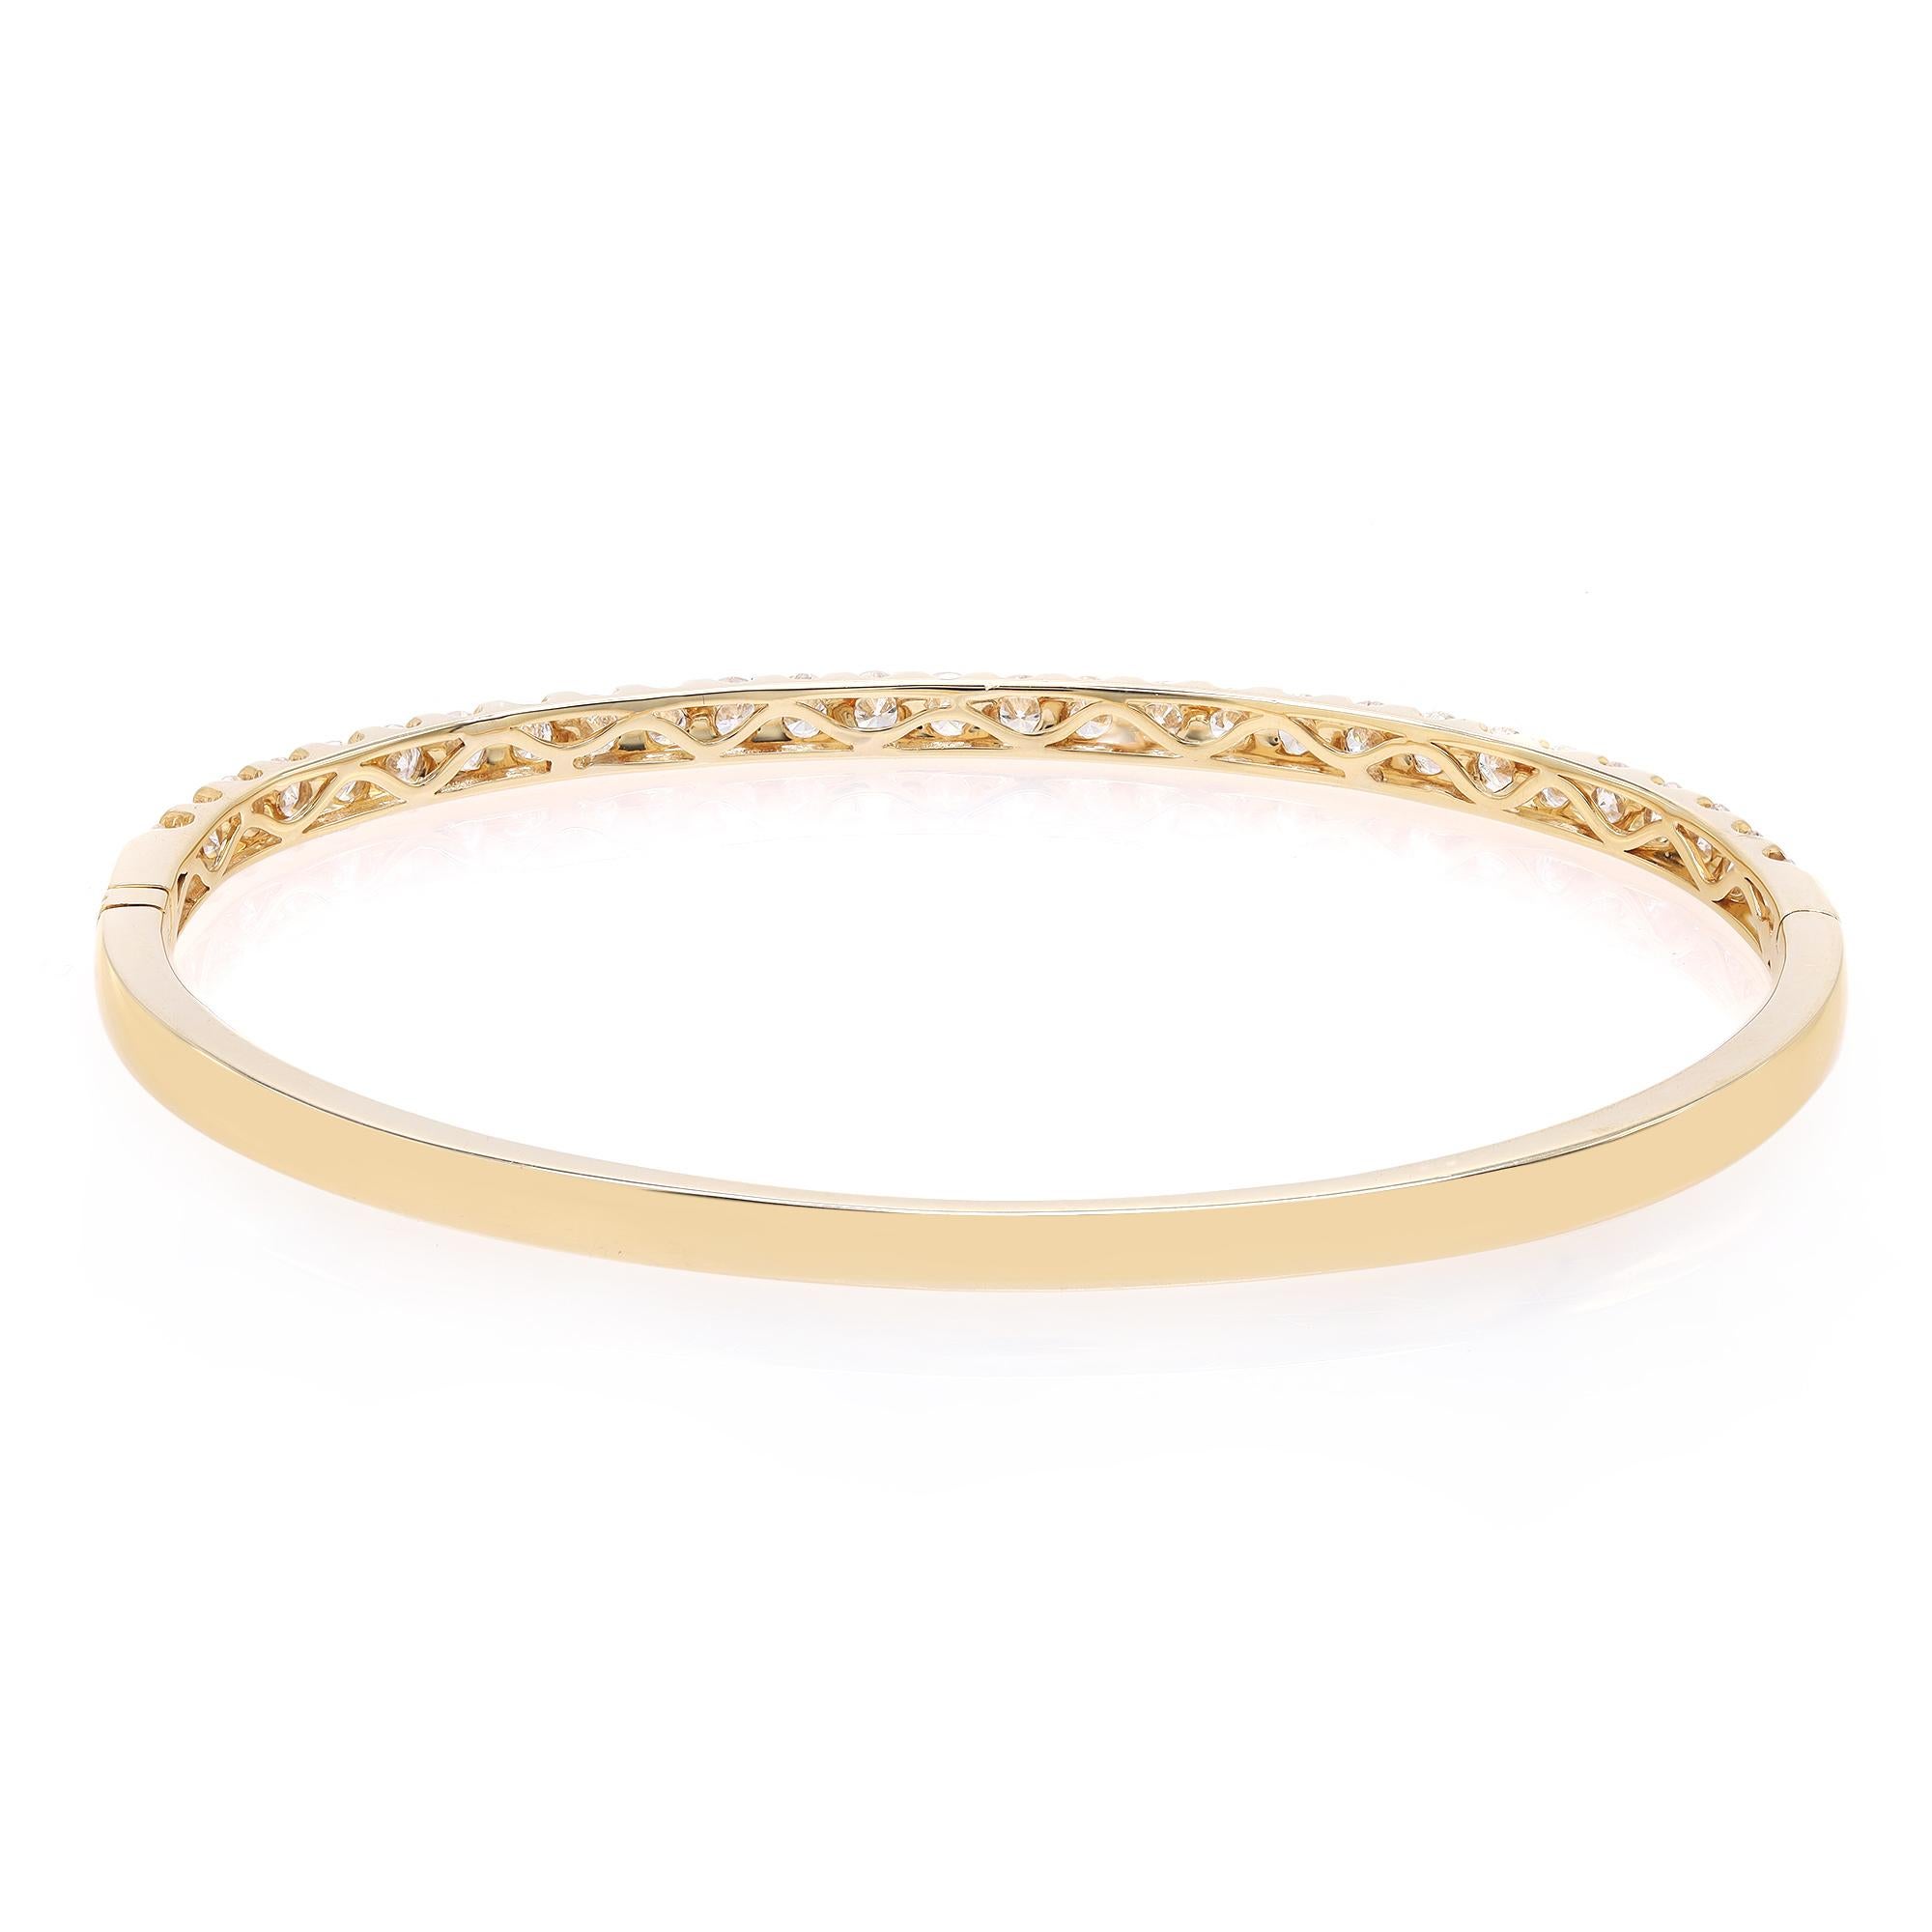 Modern Rachel Koen Round Cut Diamond Bangle Bracelet 18K Yellow Gold 2.00Cttw For Sale